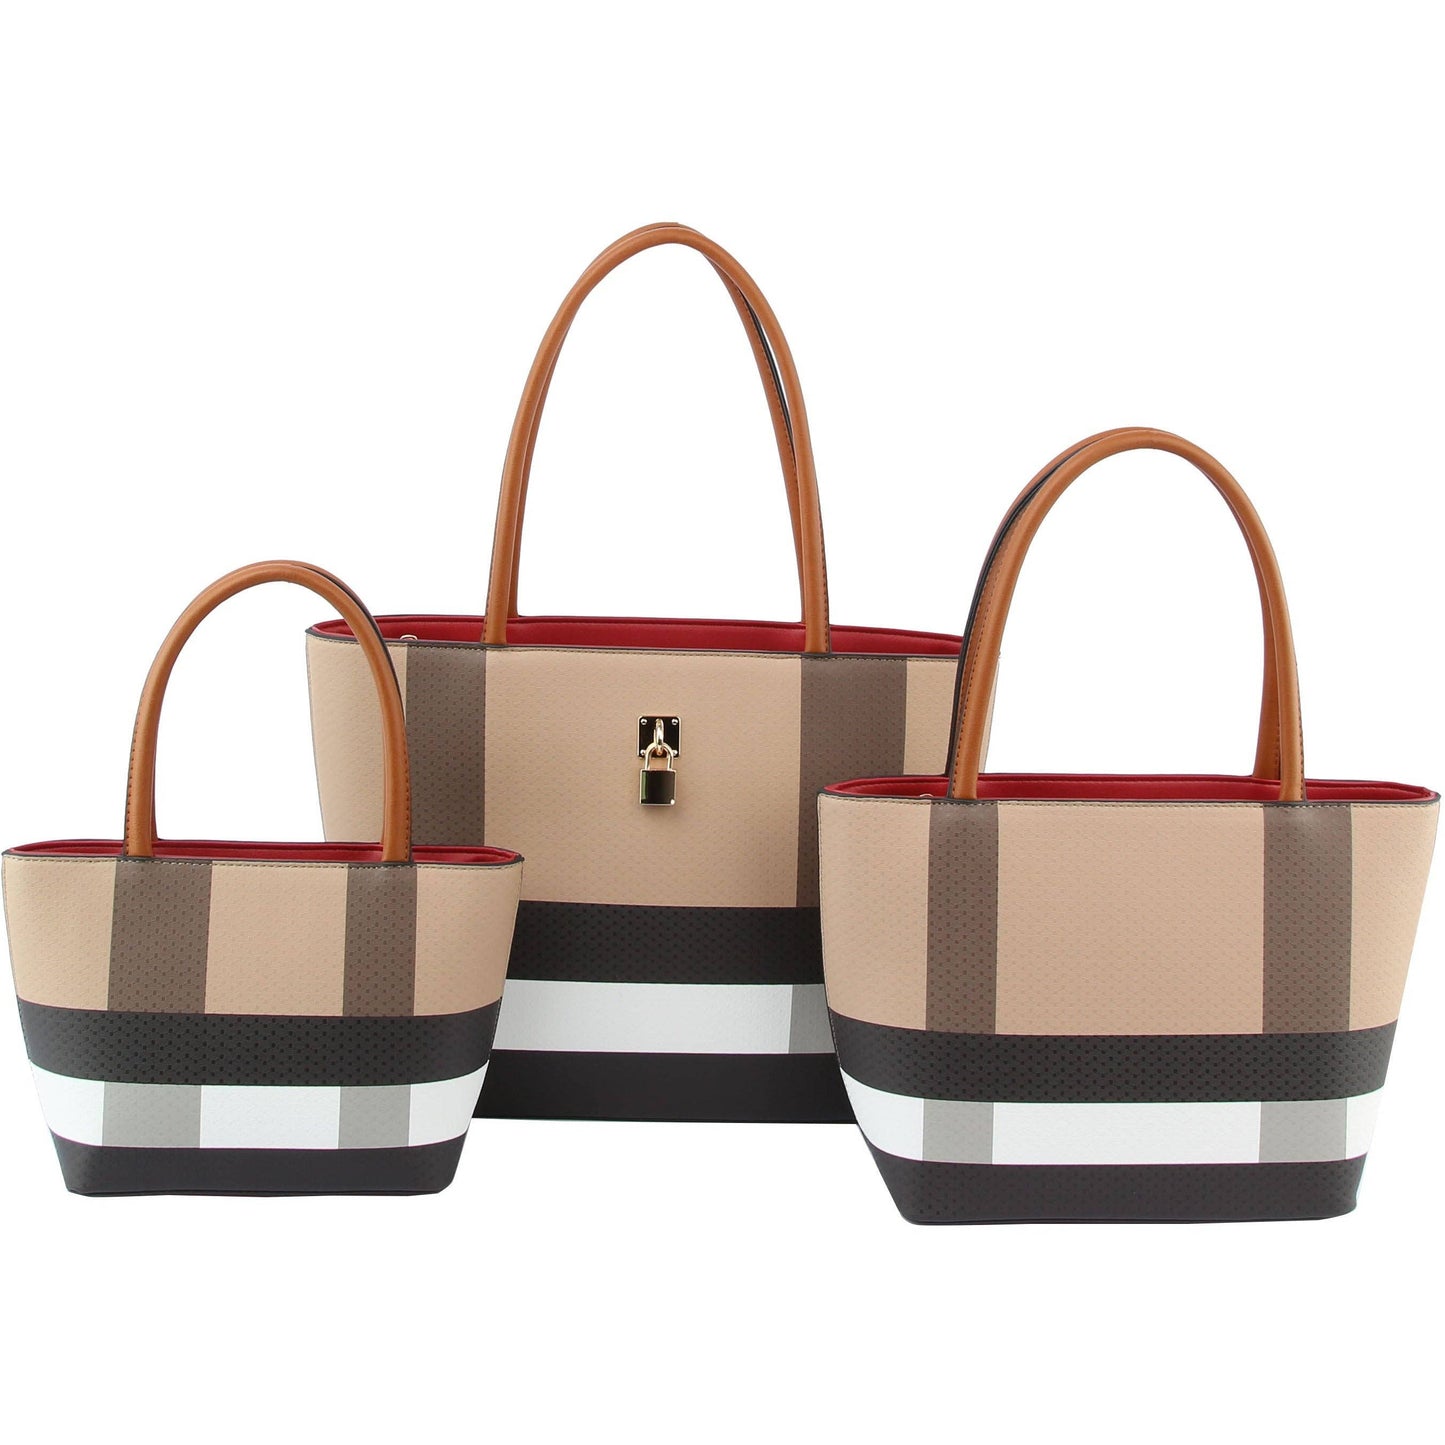 3 in 1 Purses and Handbags Tote Shoulder Bag: Black